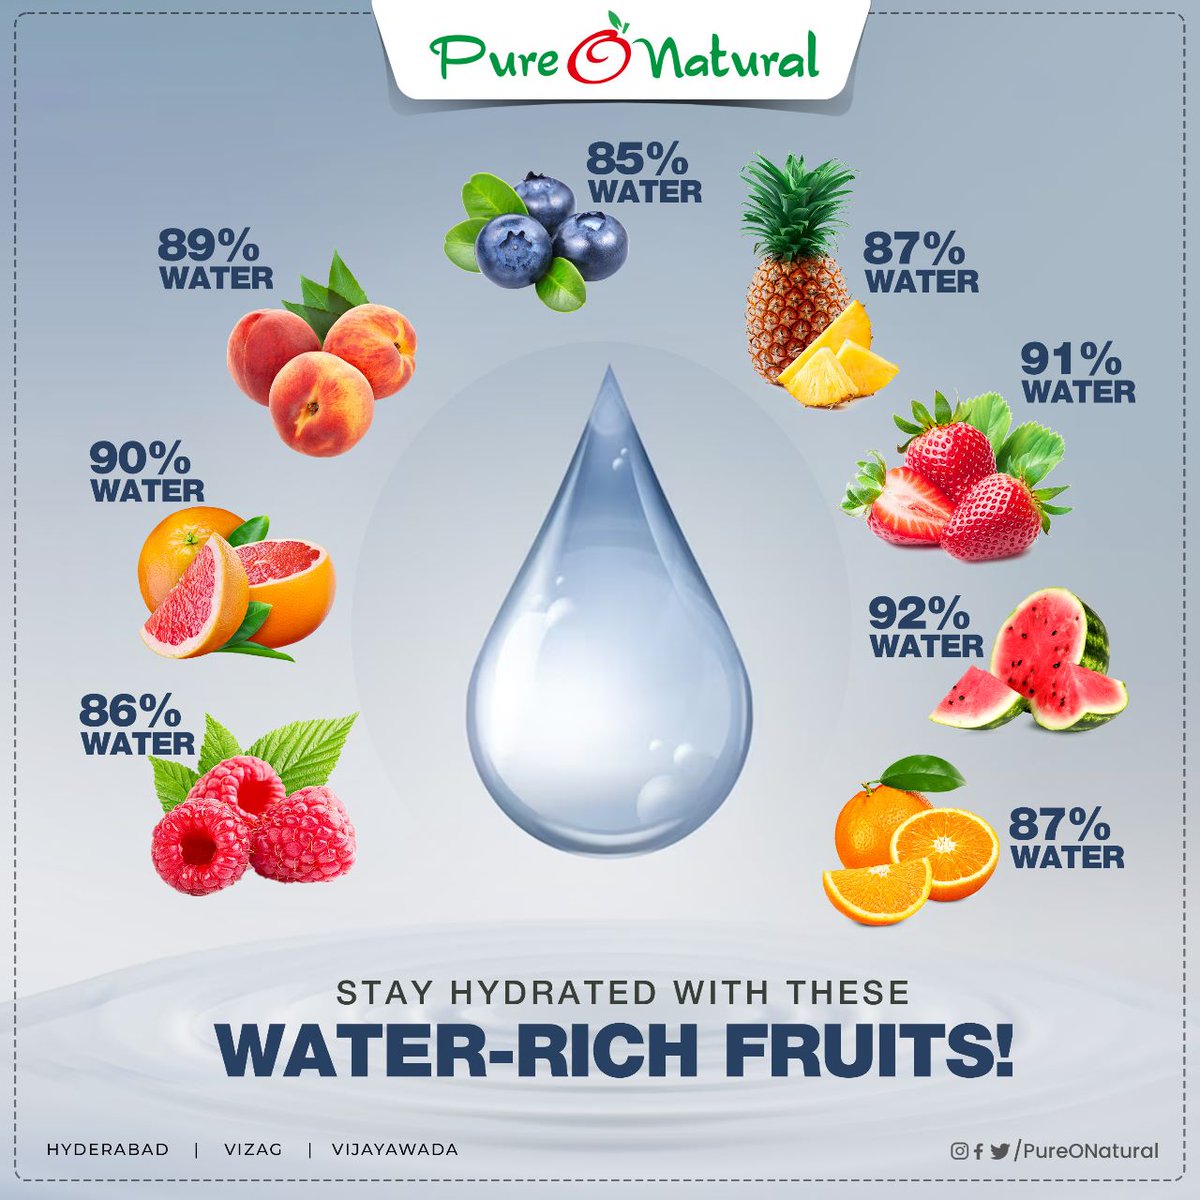 Do you struggle with daily water intake? 💦 Eat them instead! 😋

#Hydration #Summer #Fruits #FreshFruits #FarmFresh #PureONatural #Hyderabad #Vizag #Vijaywada #FreshProduce